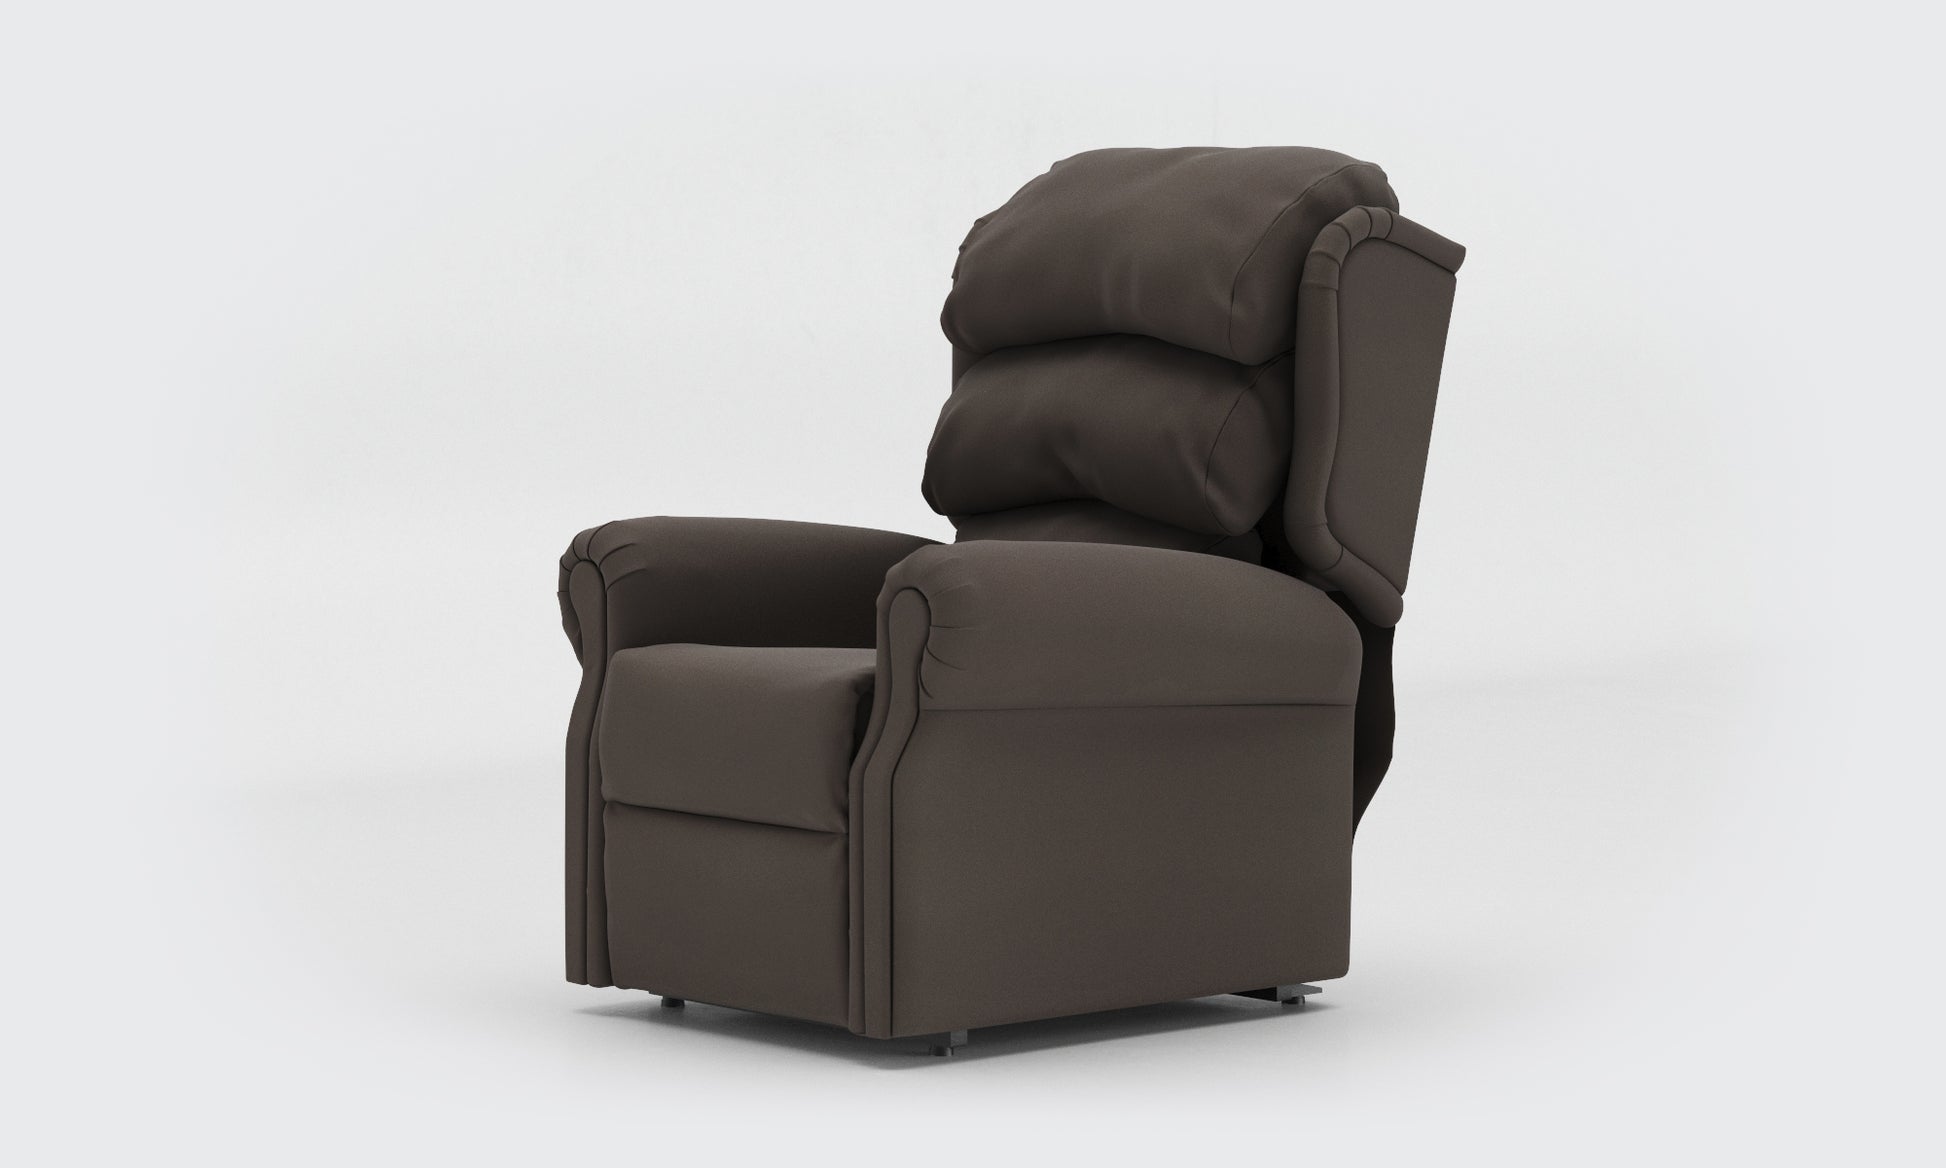 Adara Riser Recliner Chair compact waterfall leather meteor